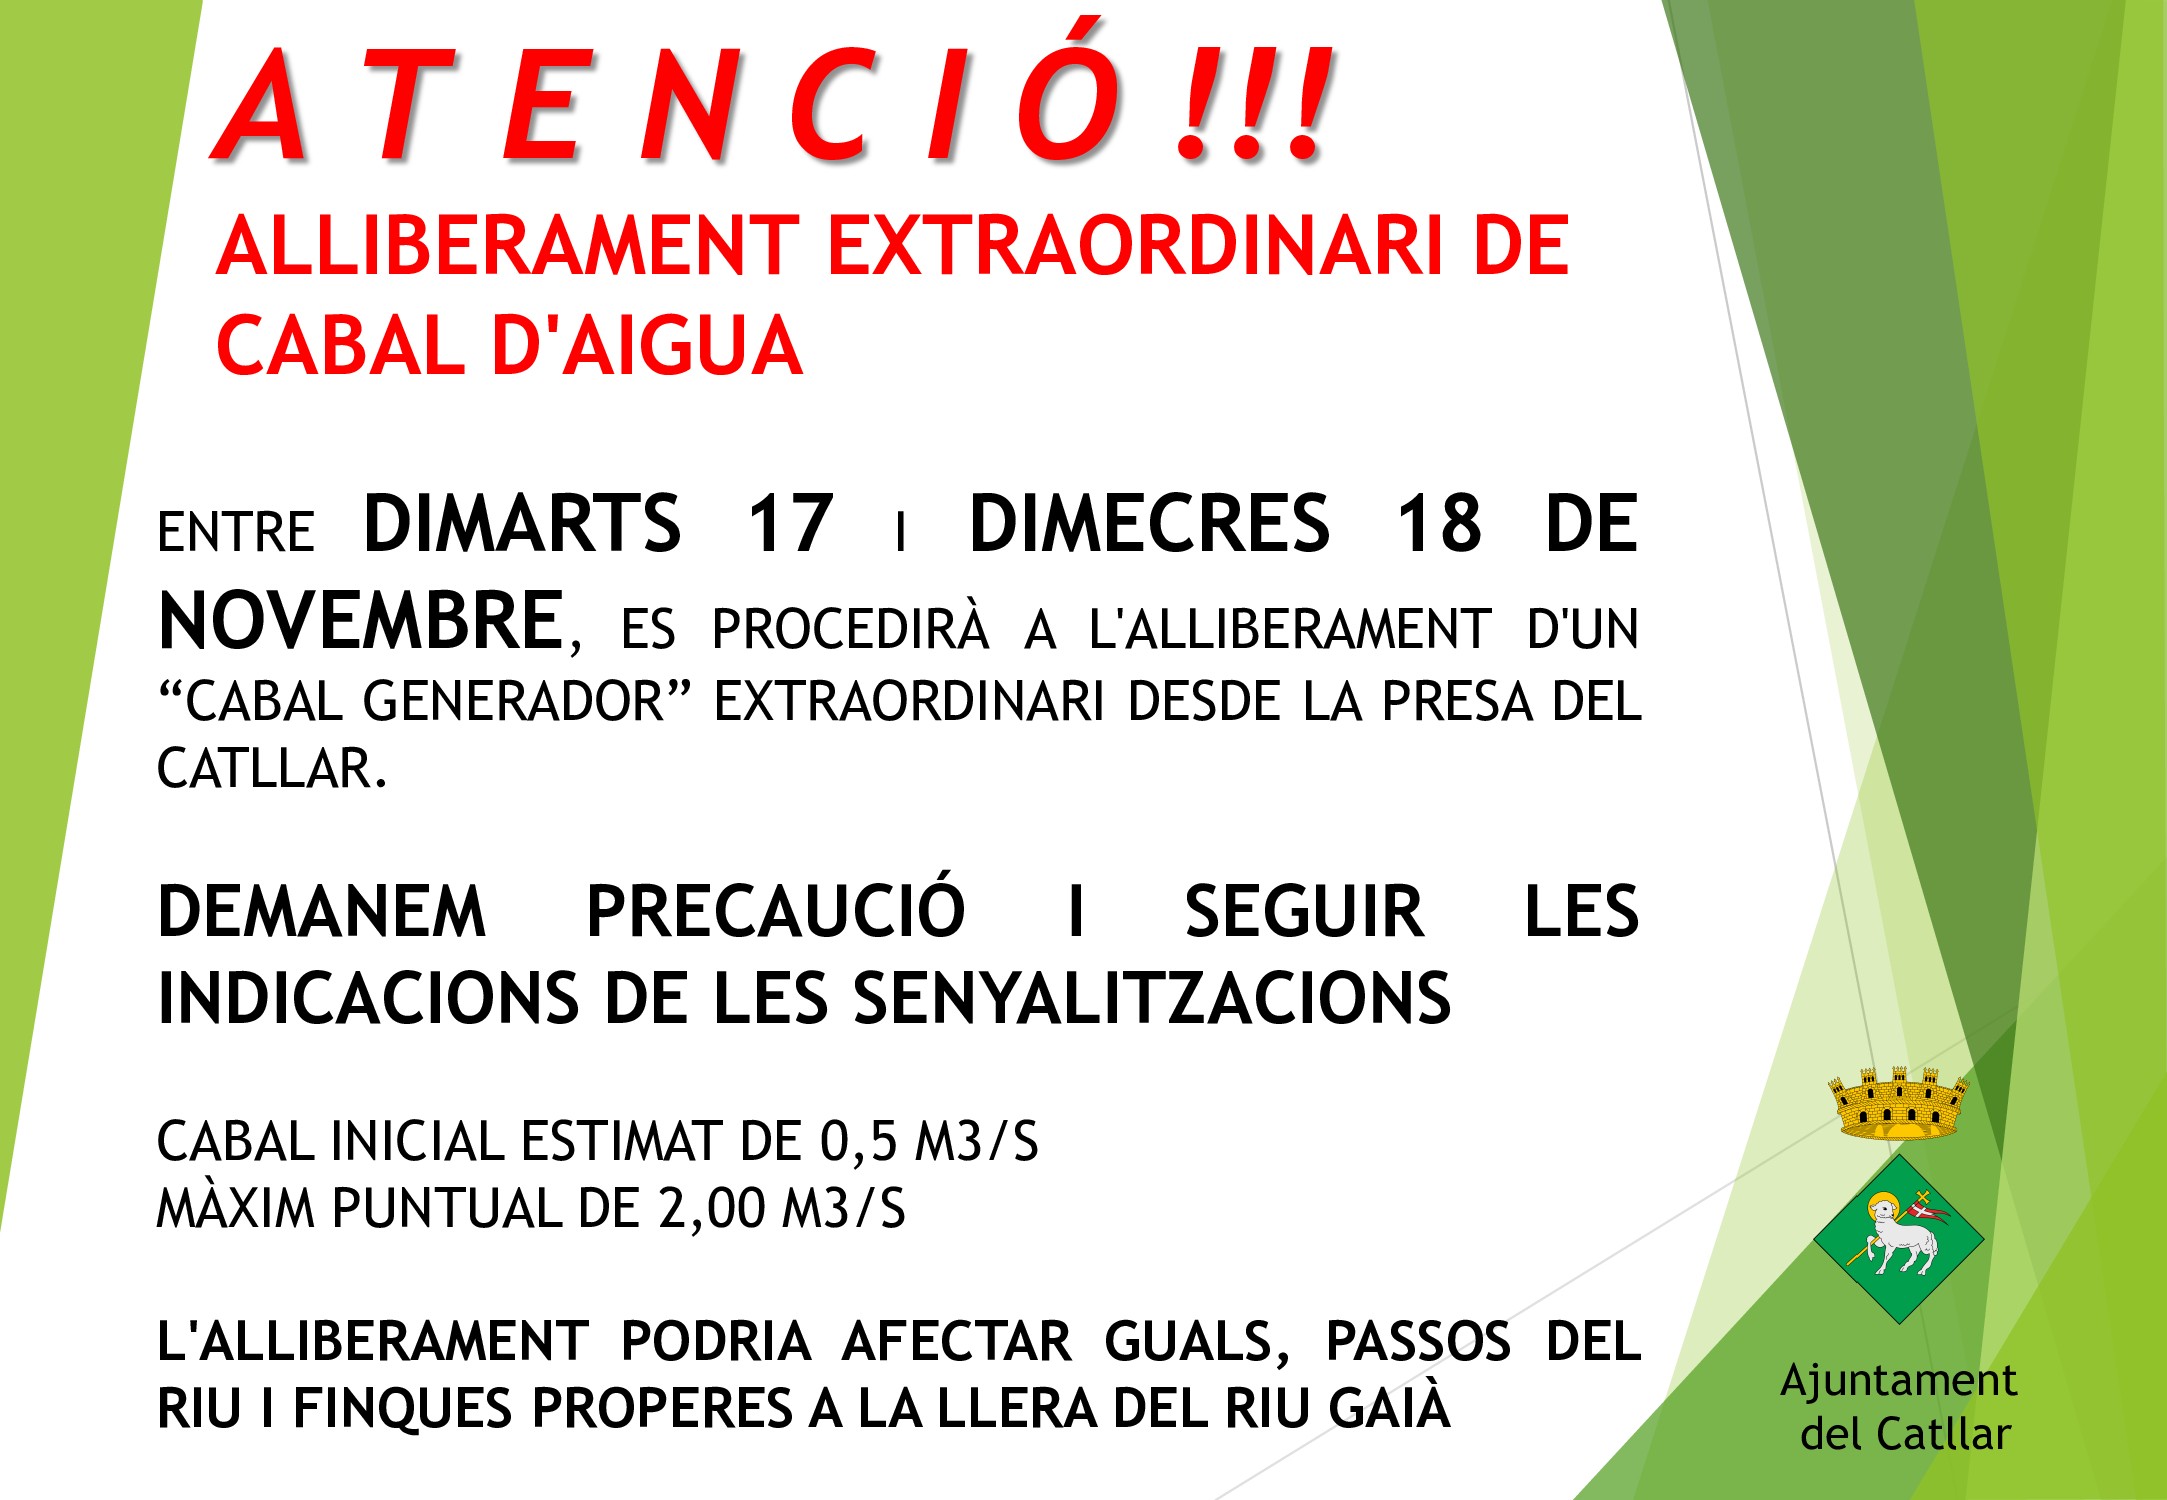 ATENCIÓN: BAJADA EXTRAORDINARIA DE CAUBAL DE AGUA